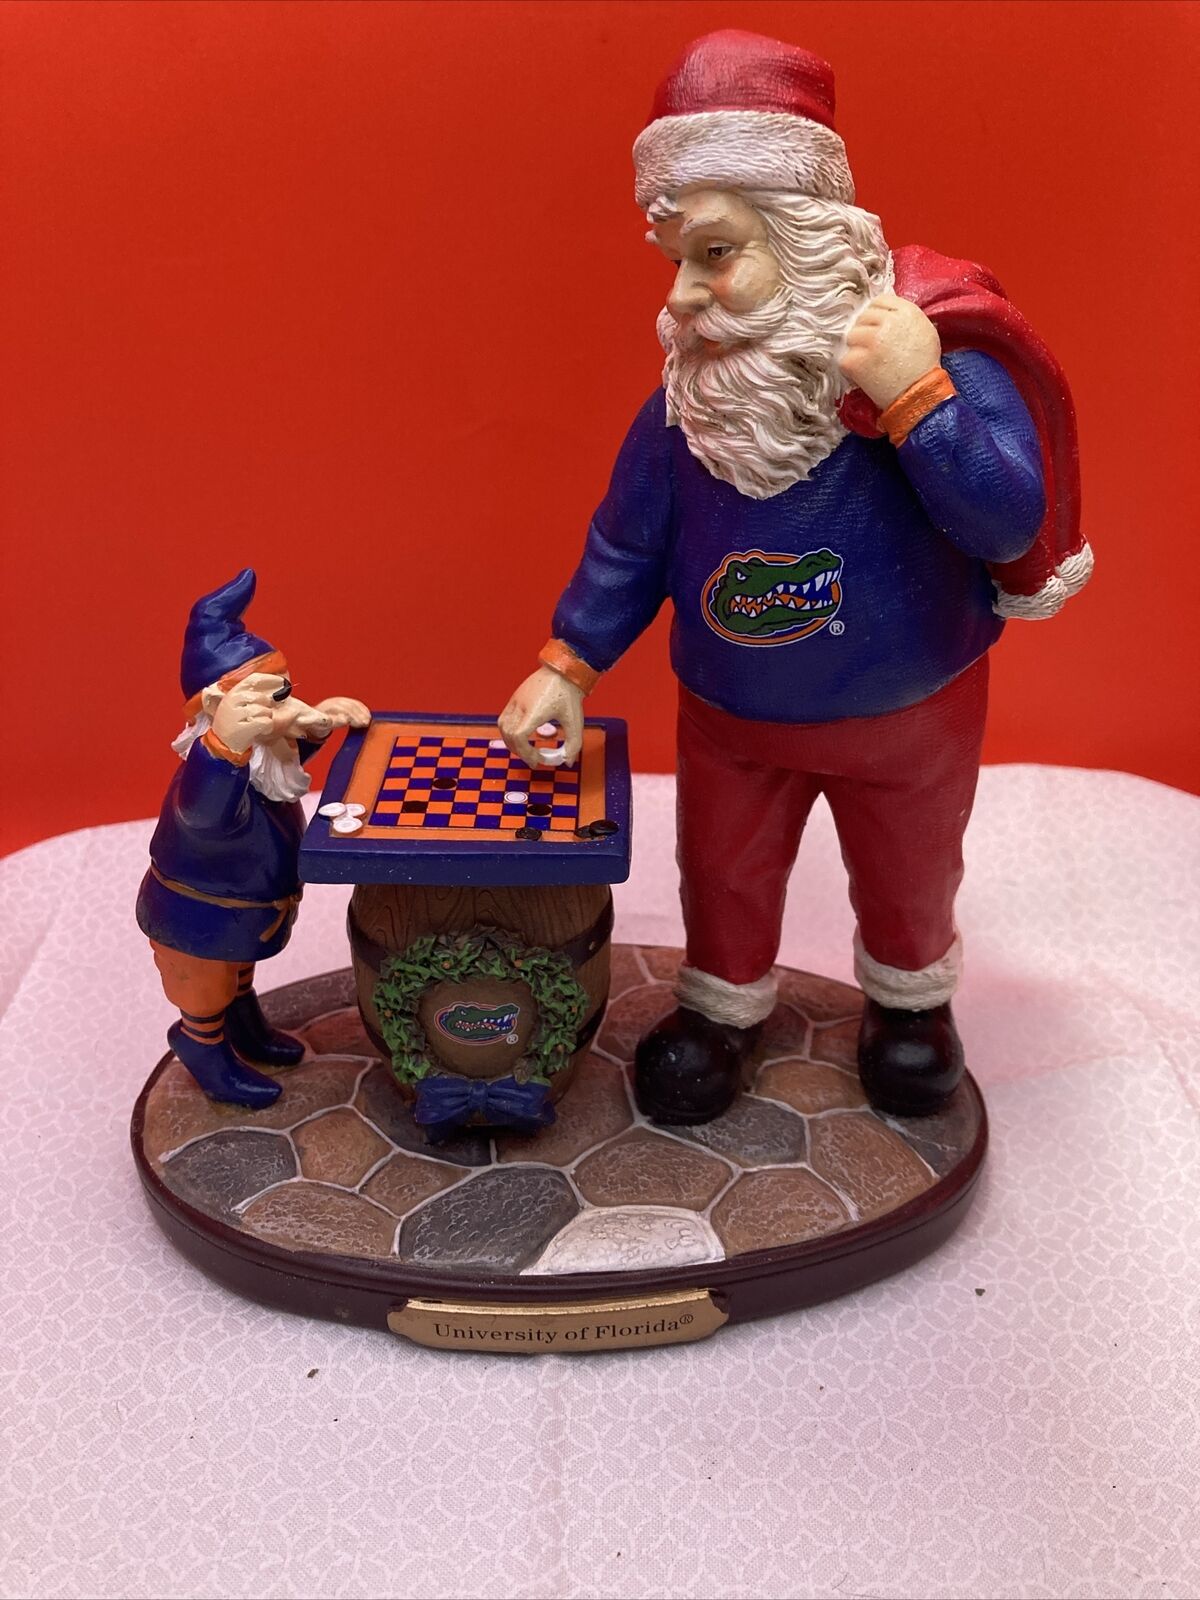 Santa checkers figurine from The Memory Company, Florida Gators 🐊 Licensed